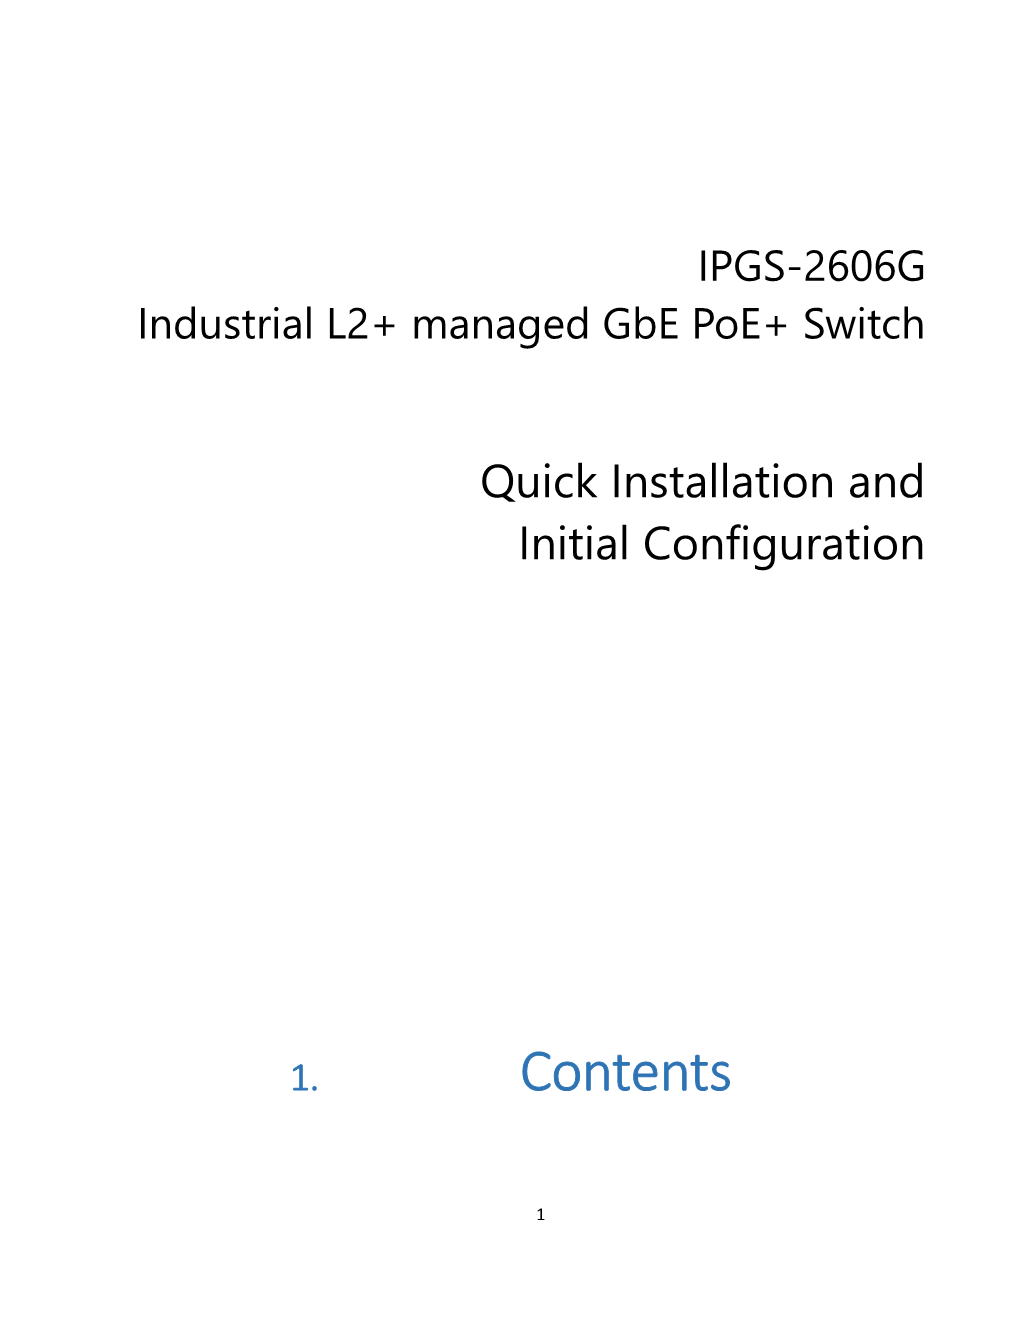 Industriall2+ Managedgbepoe+ Switch